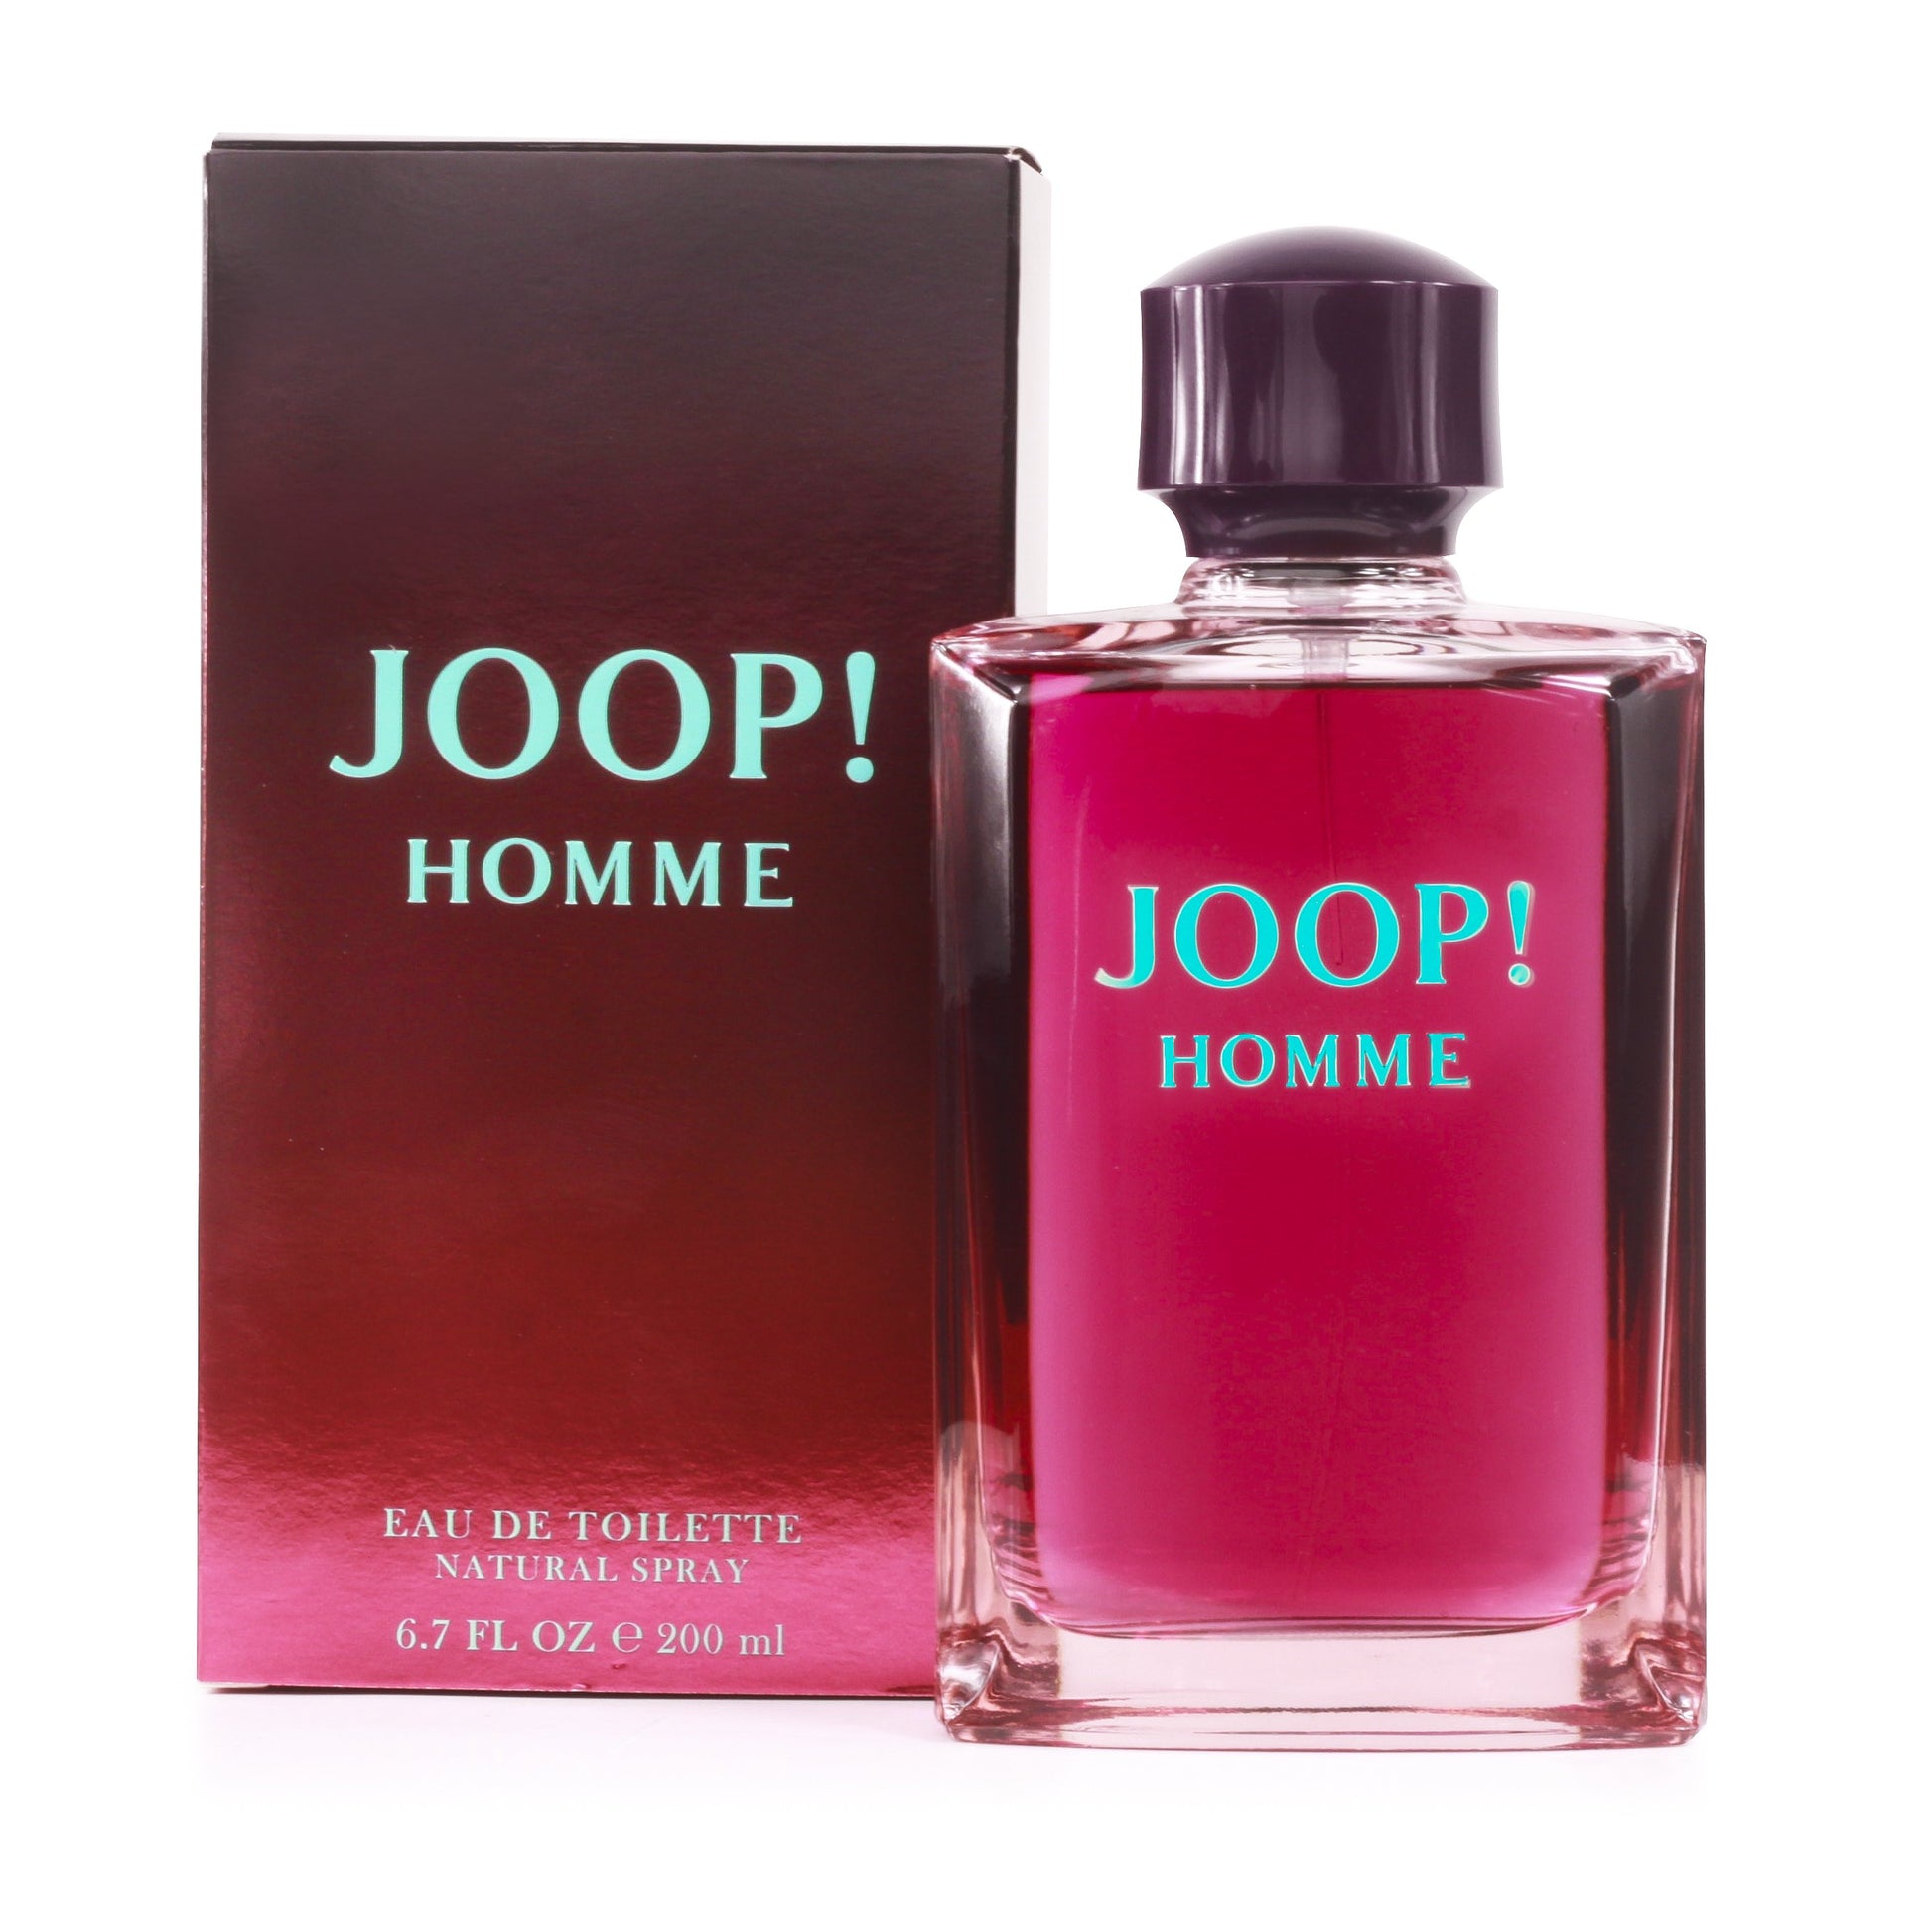 Joop! Homme Eau de Toilette Spray for Men by Joop!, Product image 1